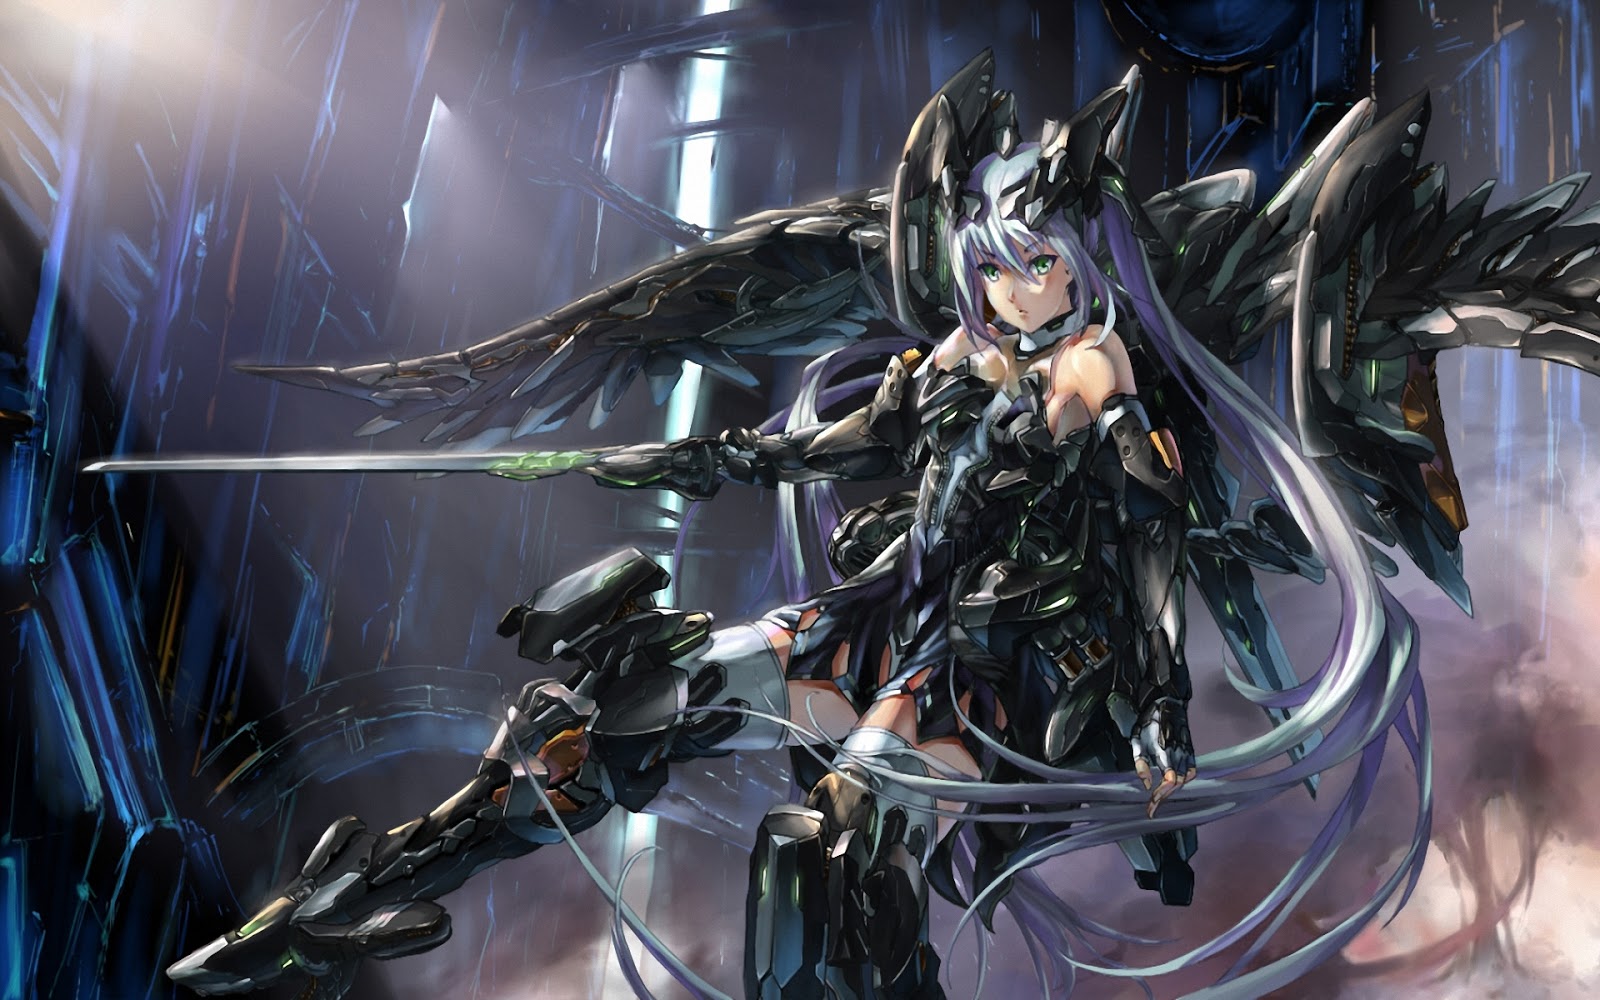 wings+armor+sword+violet+hair+girl+hd+wallpaper+%5Banimefullfights.com%5D.jpg